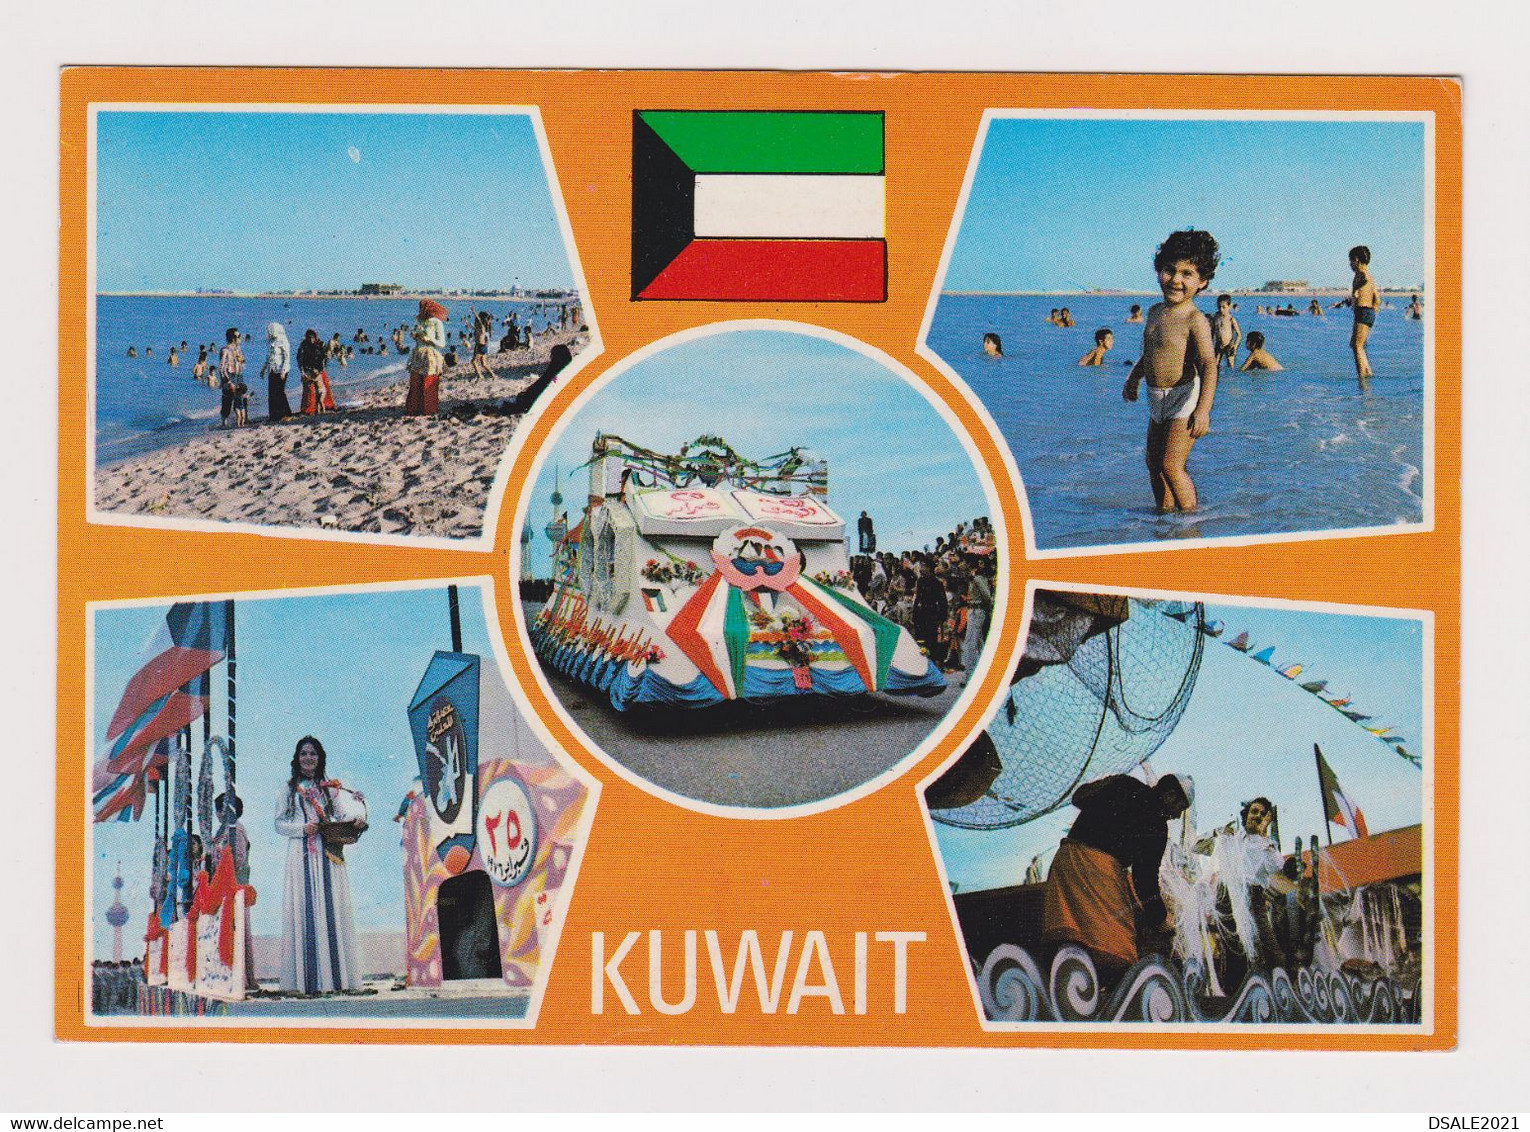 KUWAIT Carnival People On Beech View Vintage Photo Postcard (53266) - Kuwait